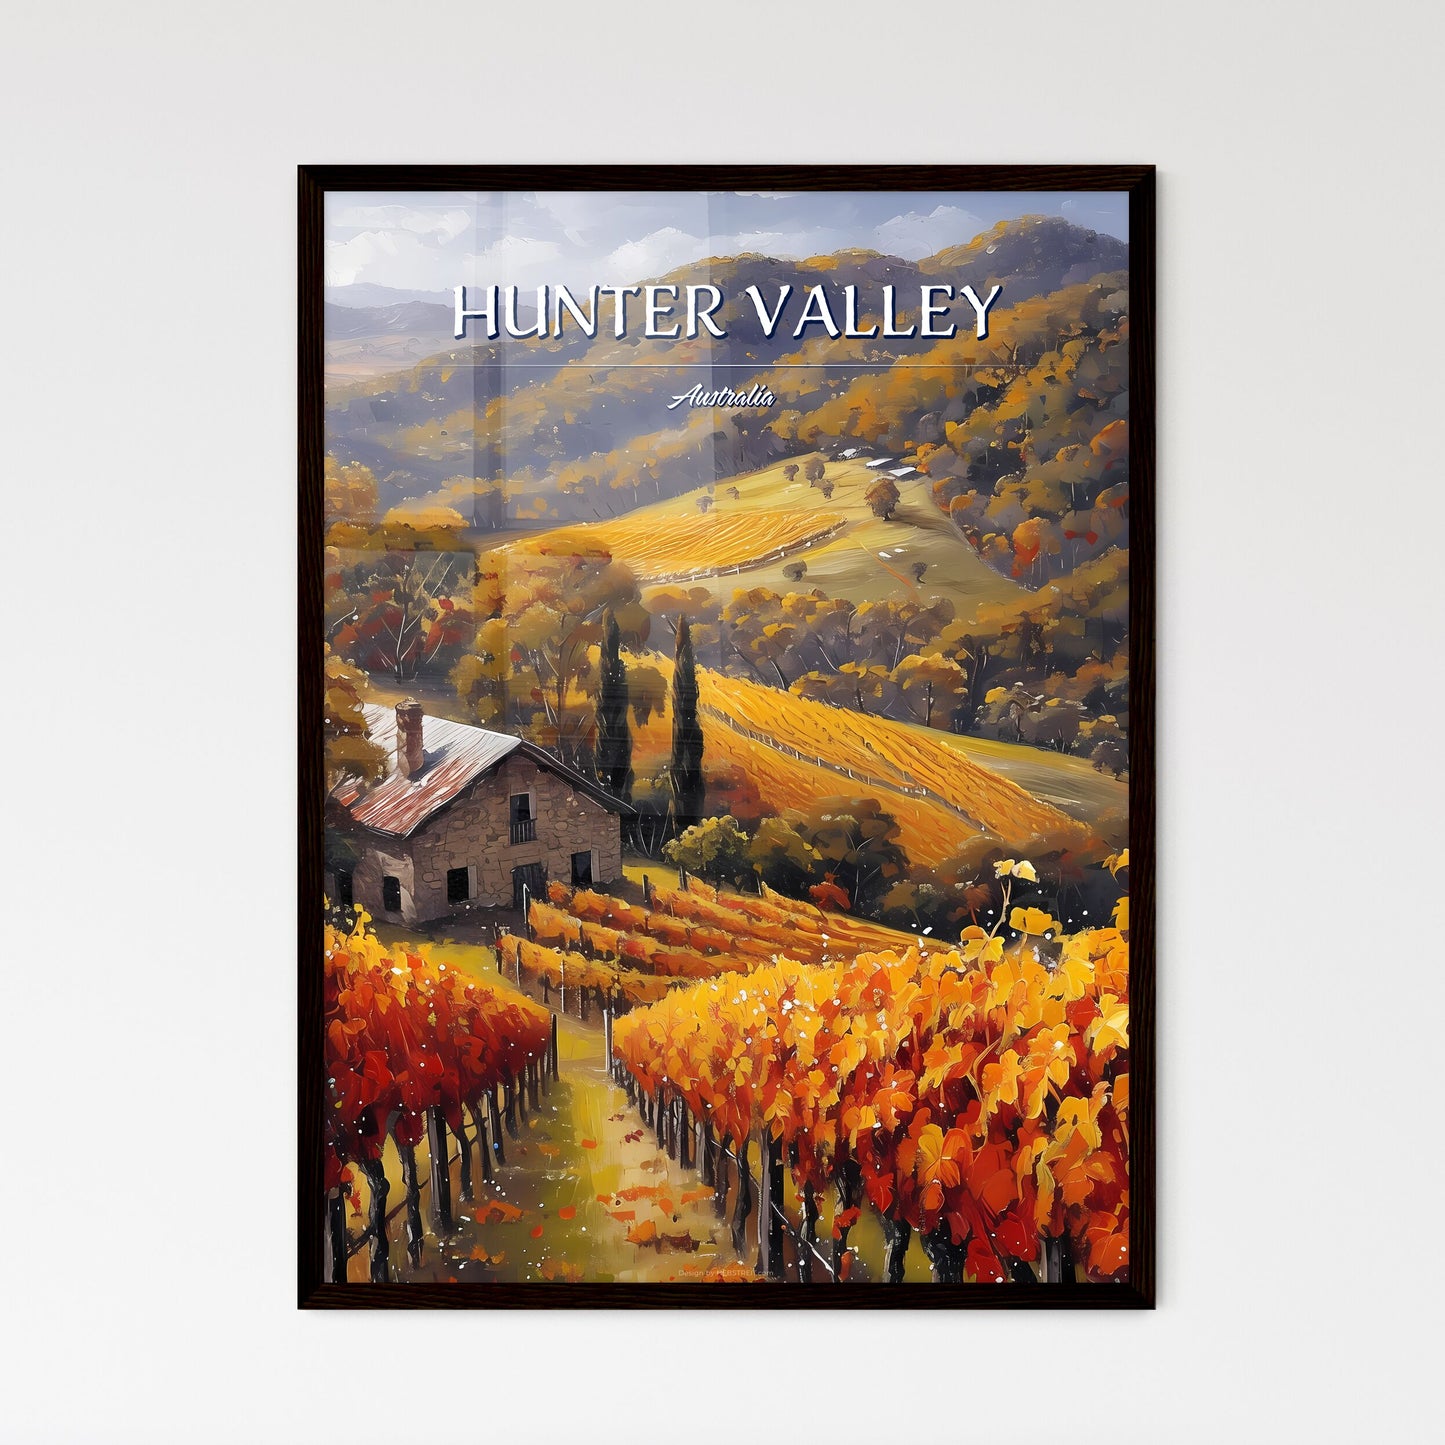 Hunter Valley, Australia - Art print of a house in a vineyard Default Title